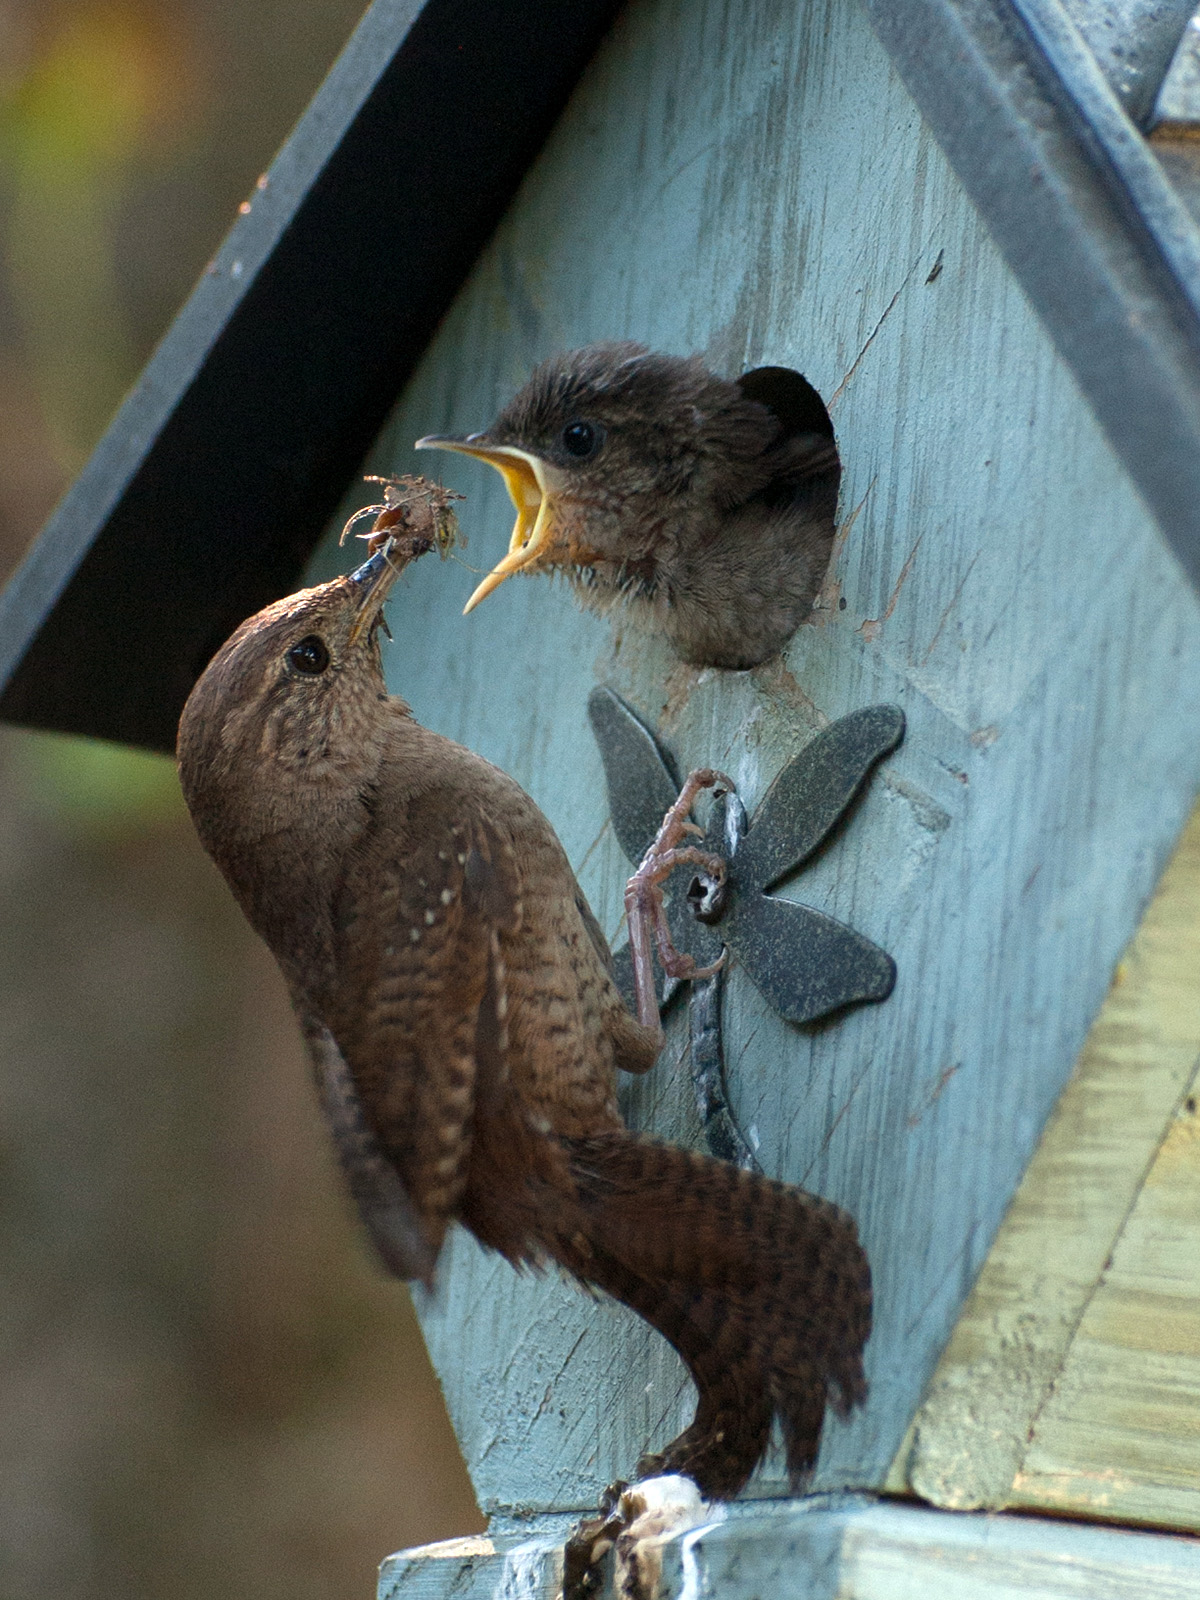 Wren feeding insect to baby bird